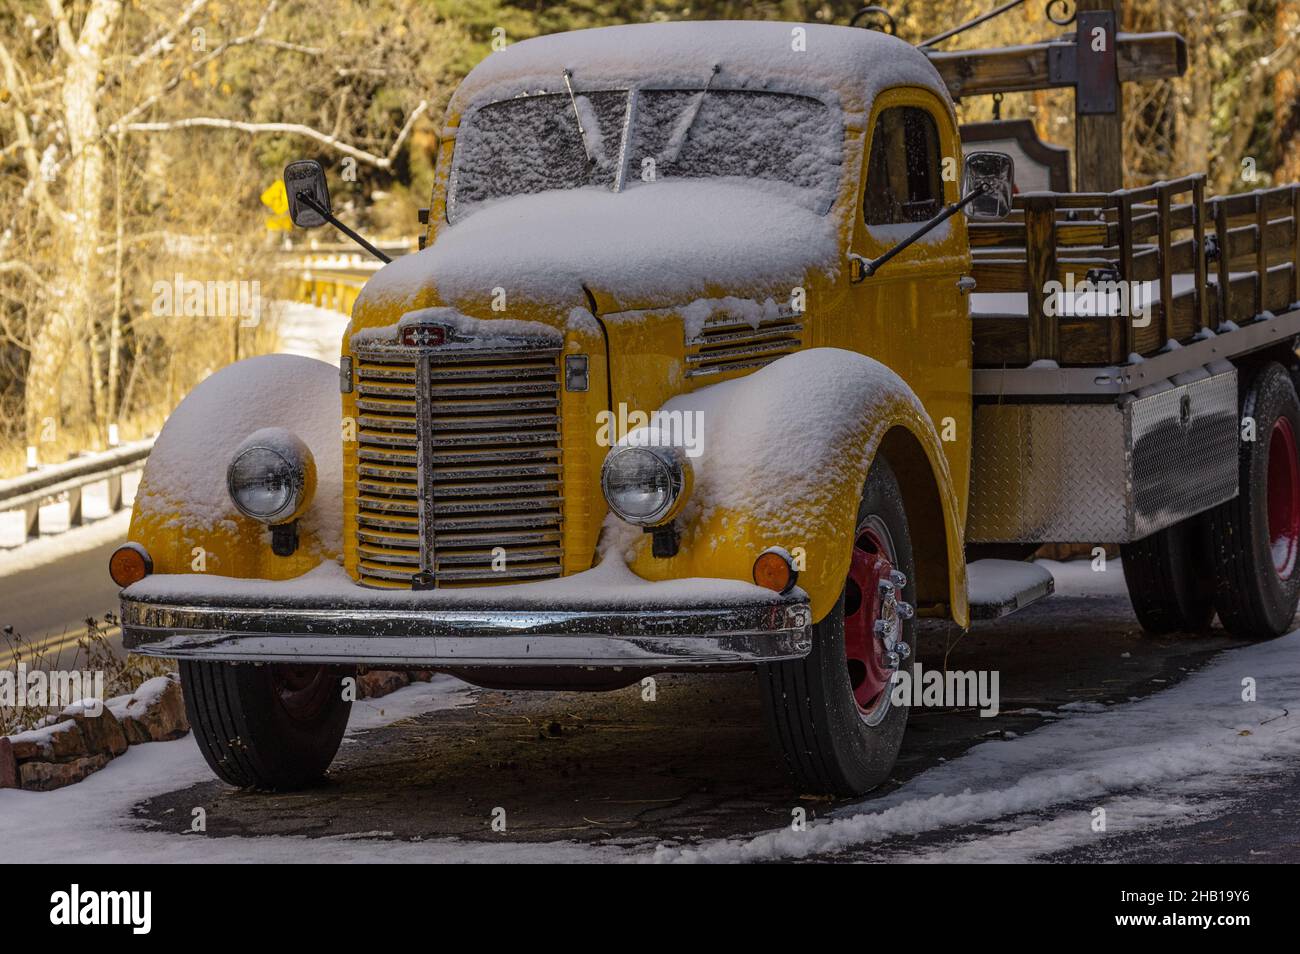 Cassic International Harverster truck on display near Sedona, Arizona, shown snow dusted. Stock Photo